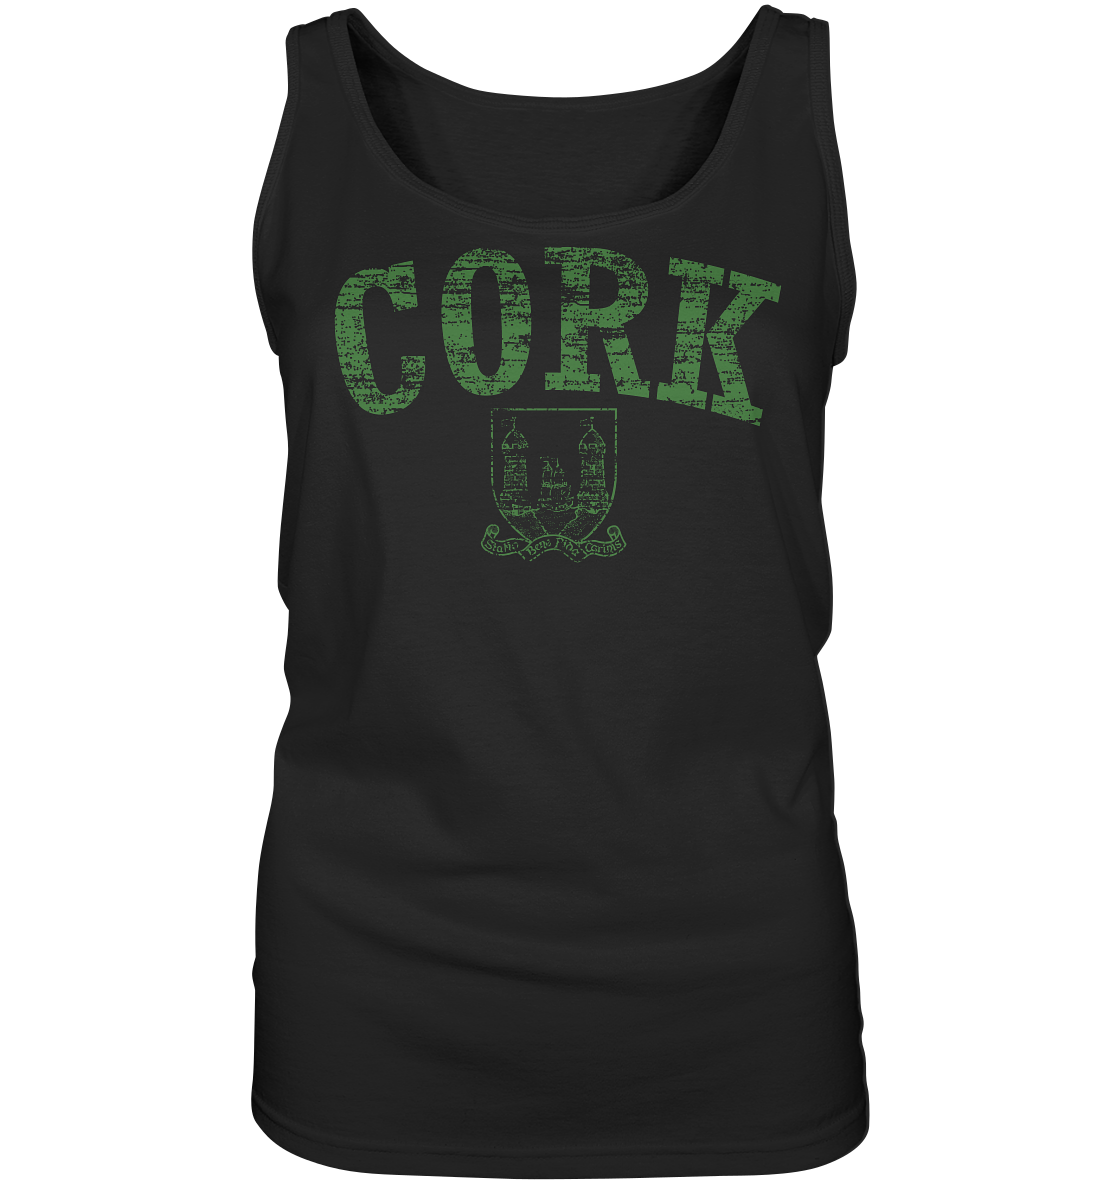 "Cork - Statio Bene Fida Carinis" - Ladies Tank-Top